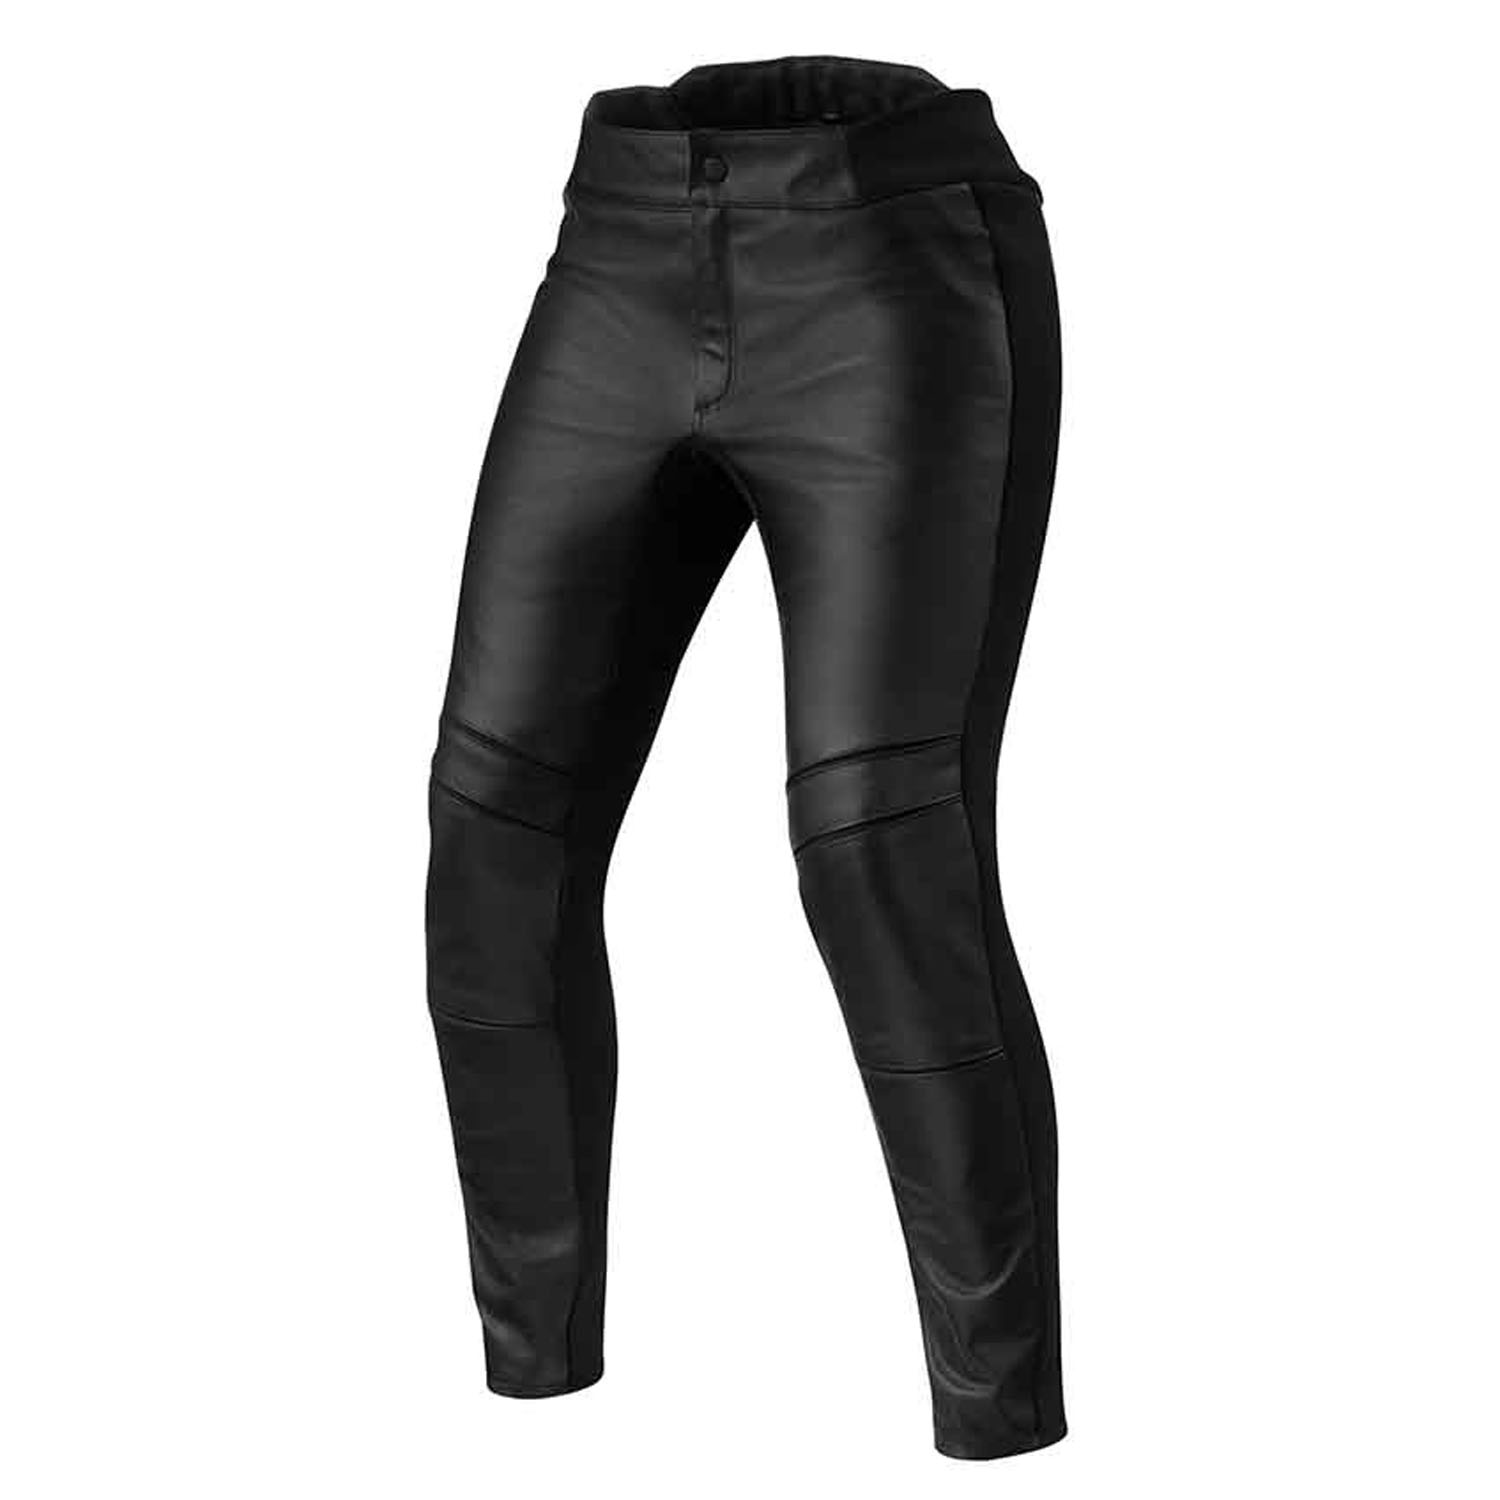 Image of EU REV'IT! Maci Ladies Black Long Motorcycle Pants Taille 40